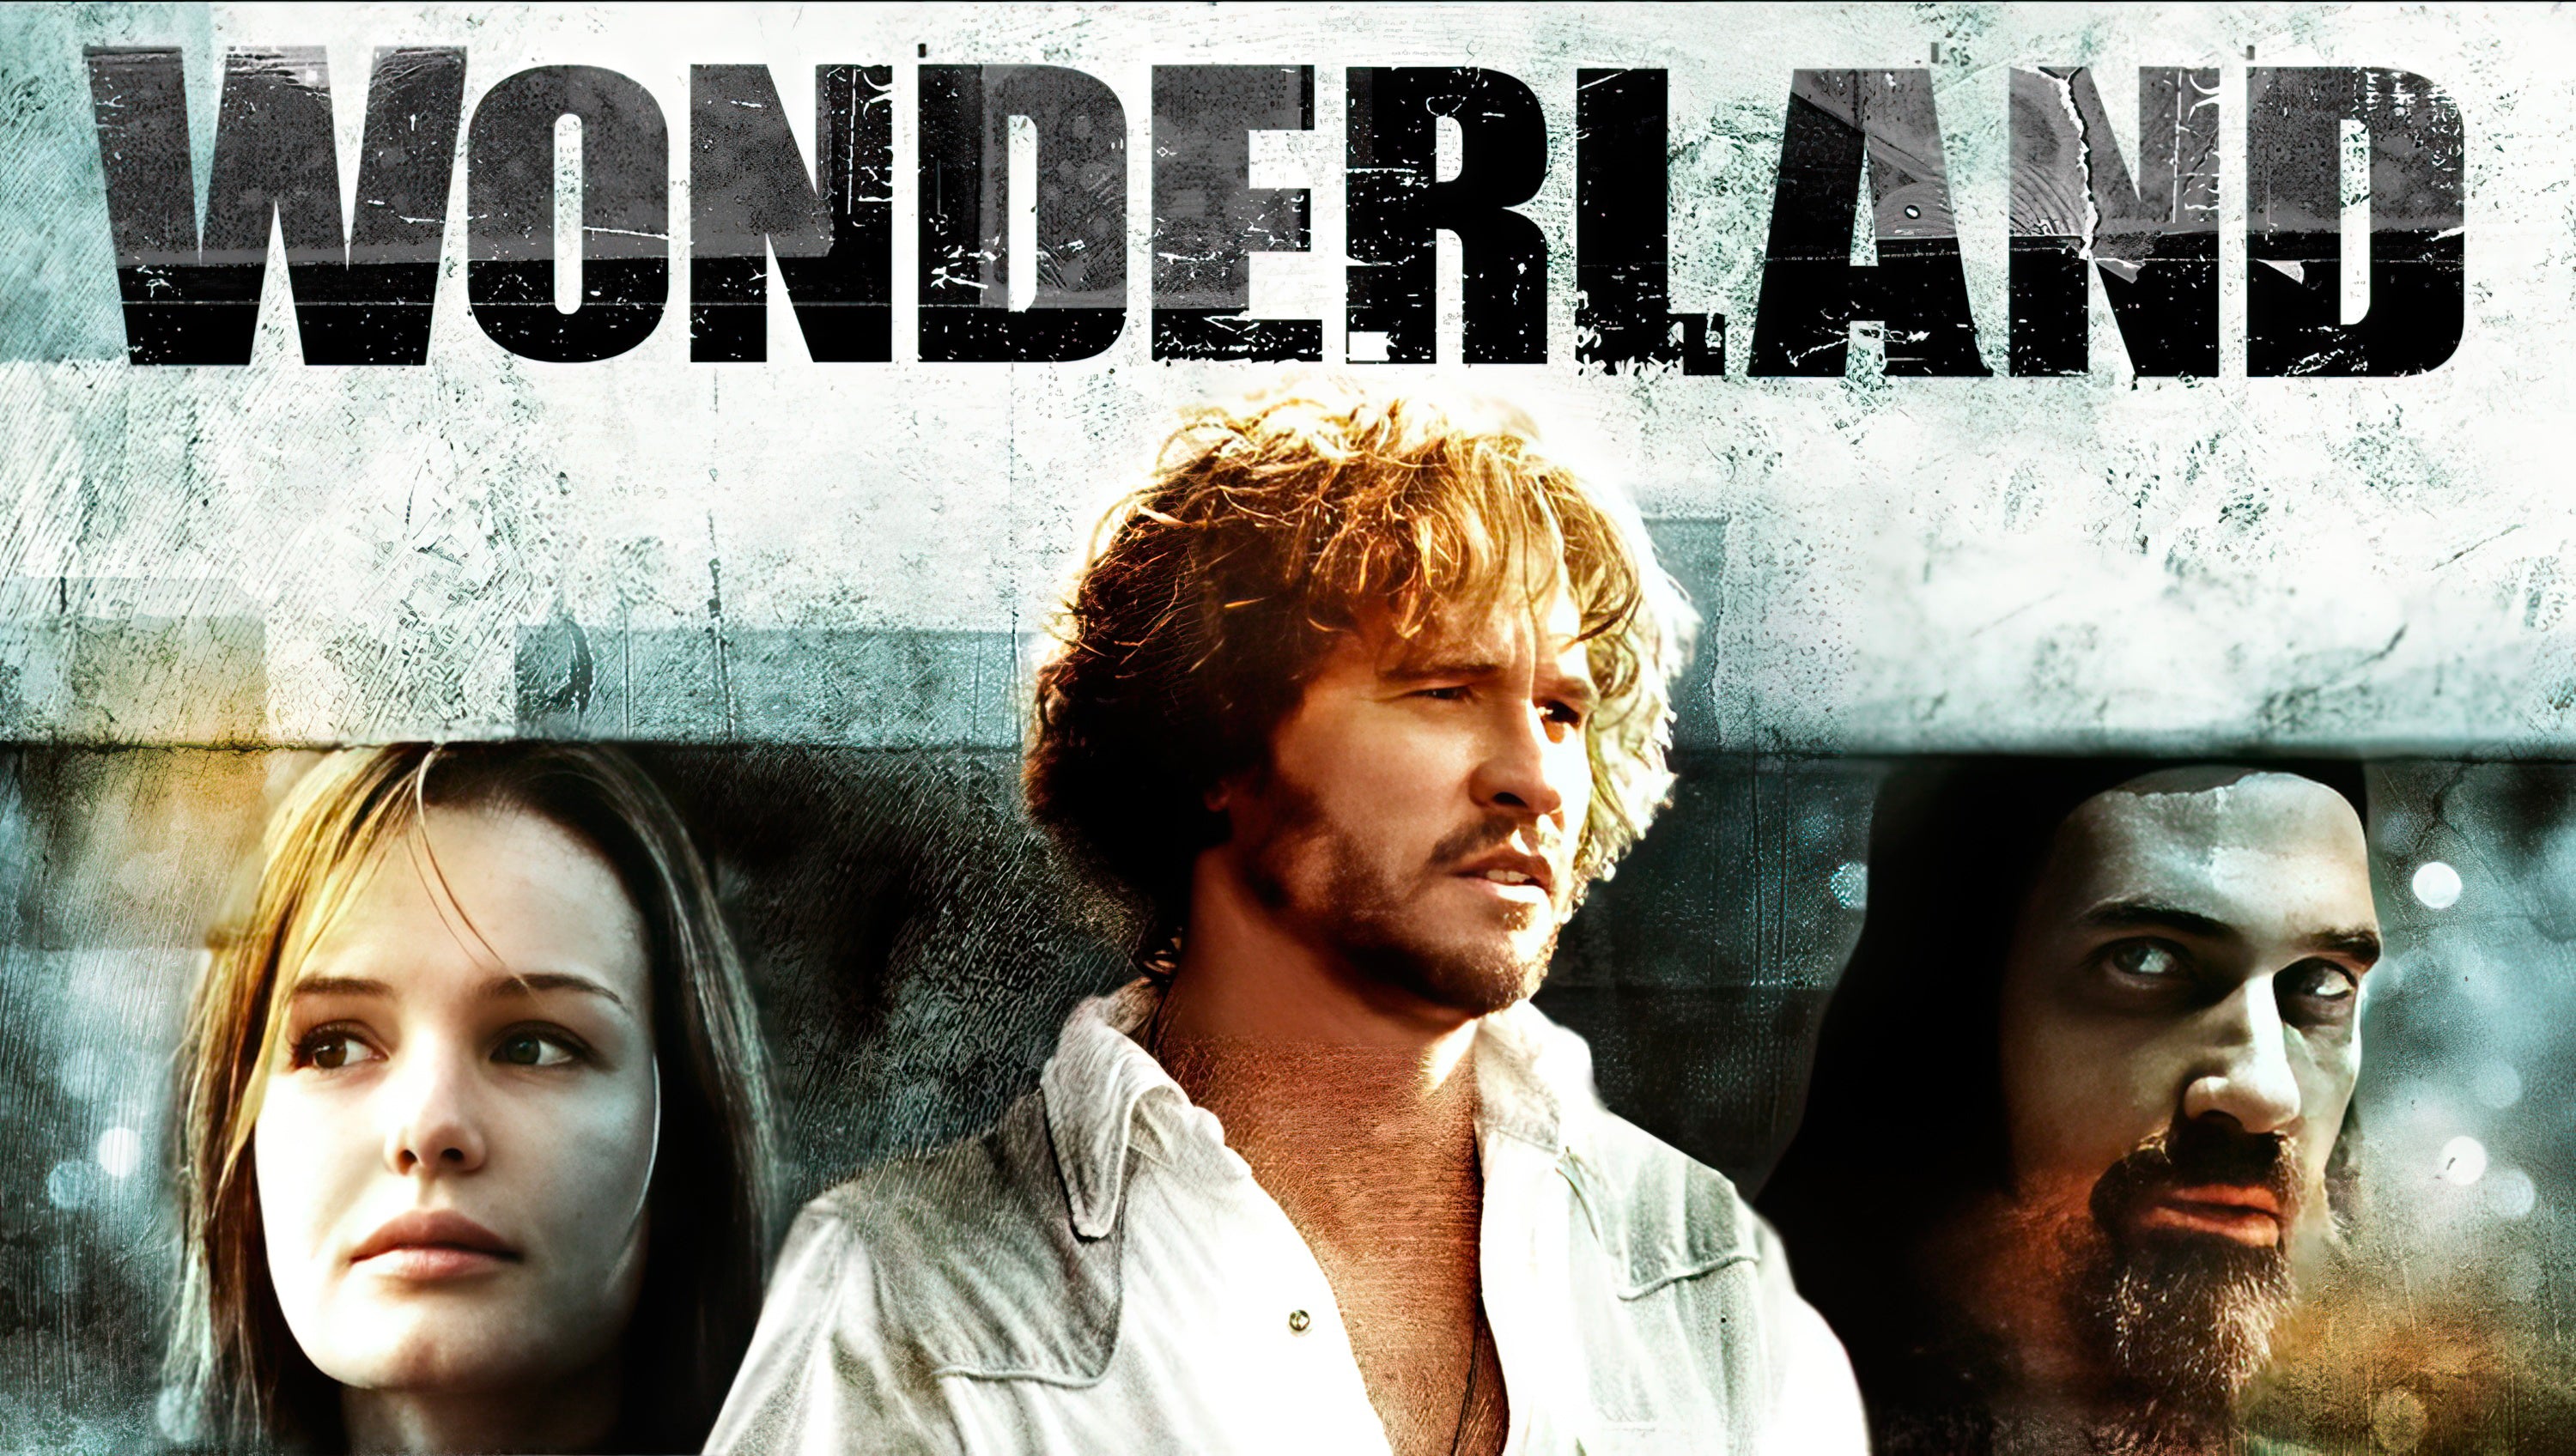 Wonderland Script Screenplay - Image of Movie Film Poster